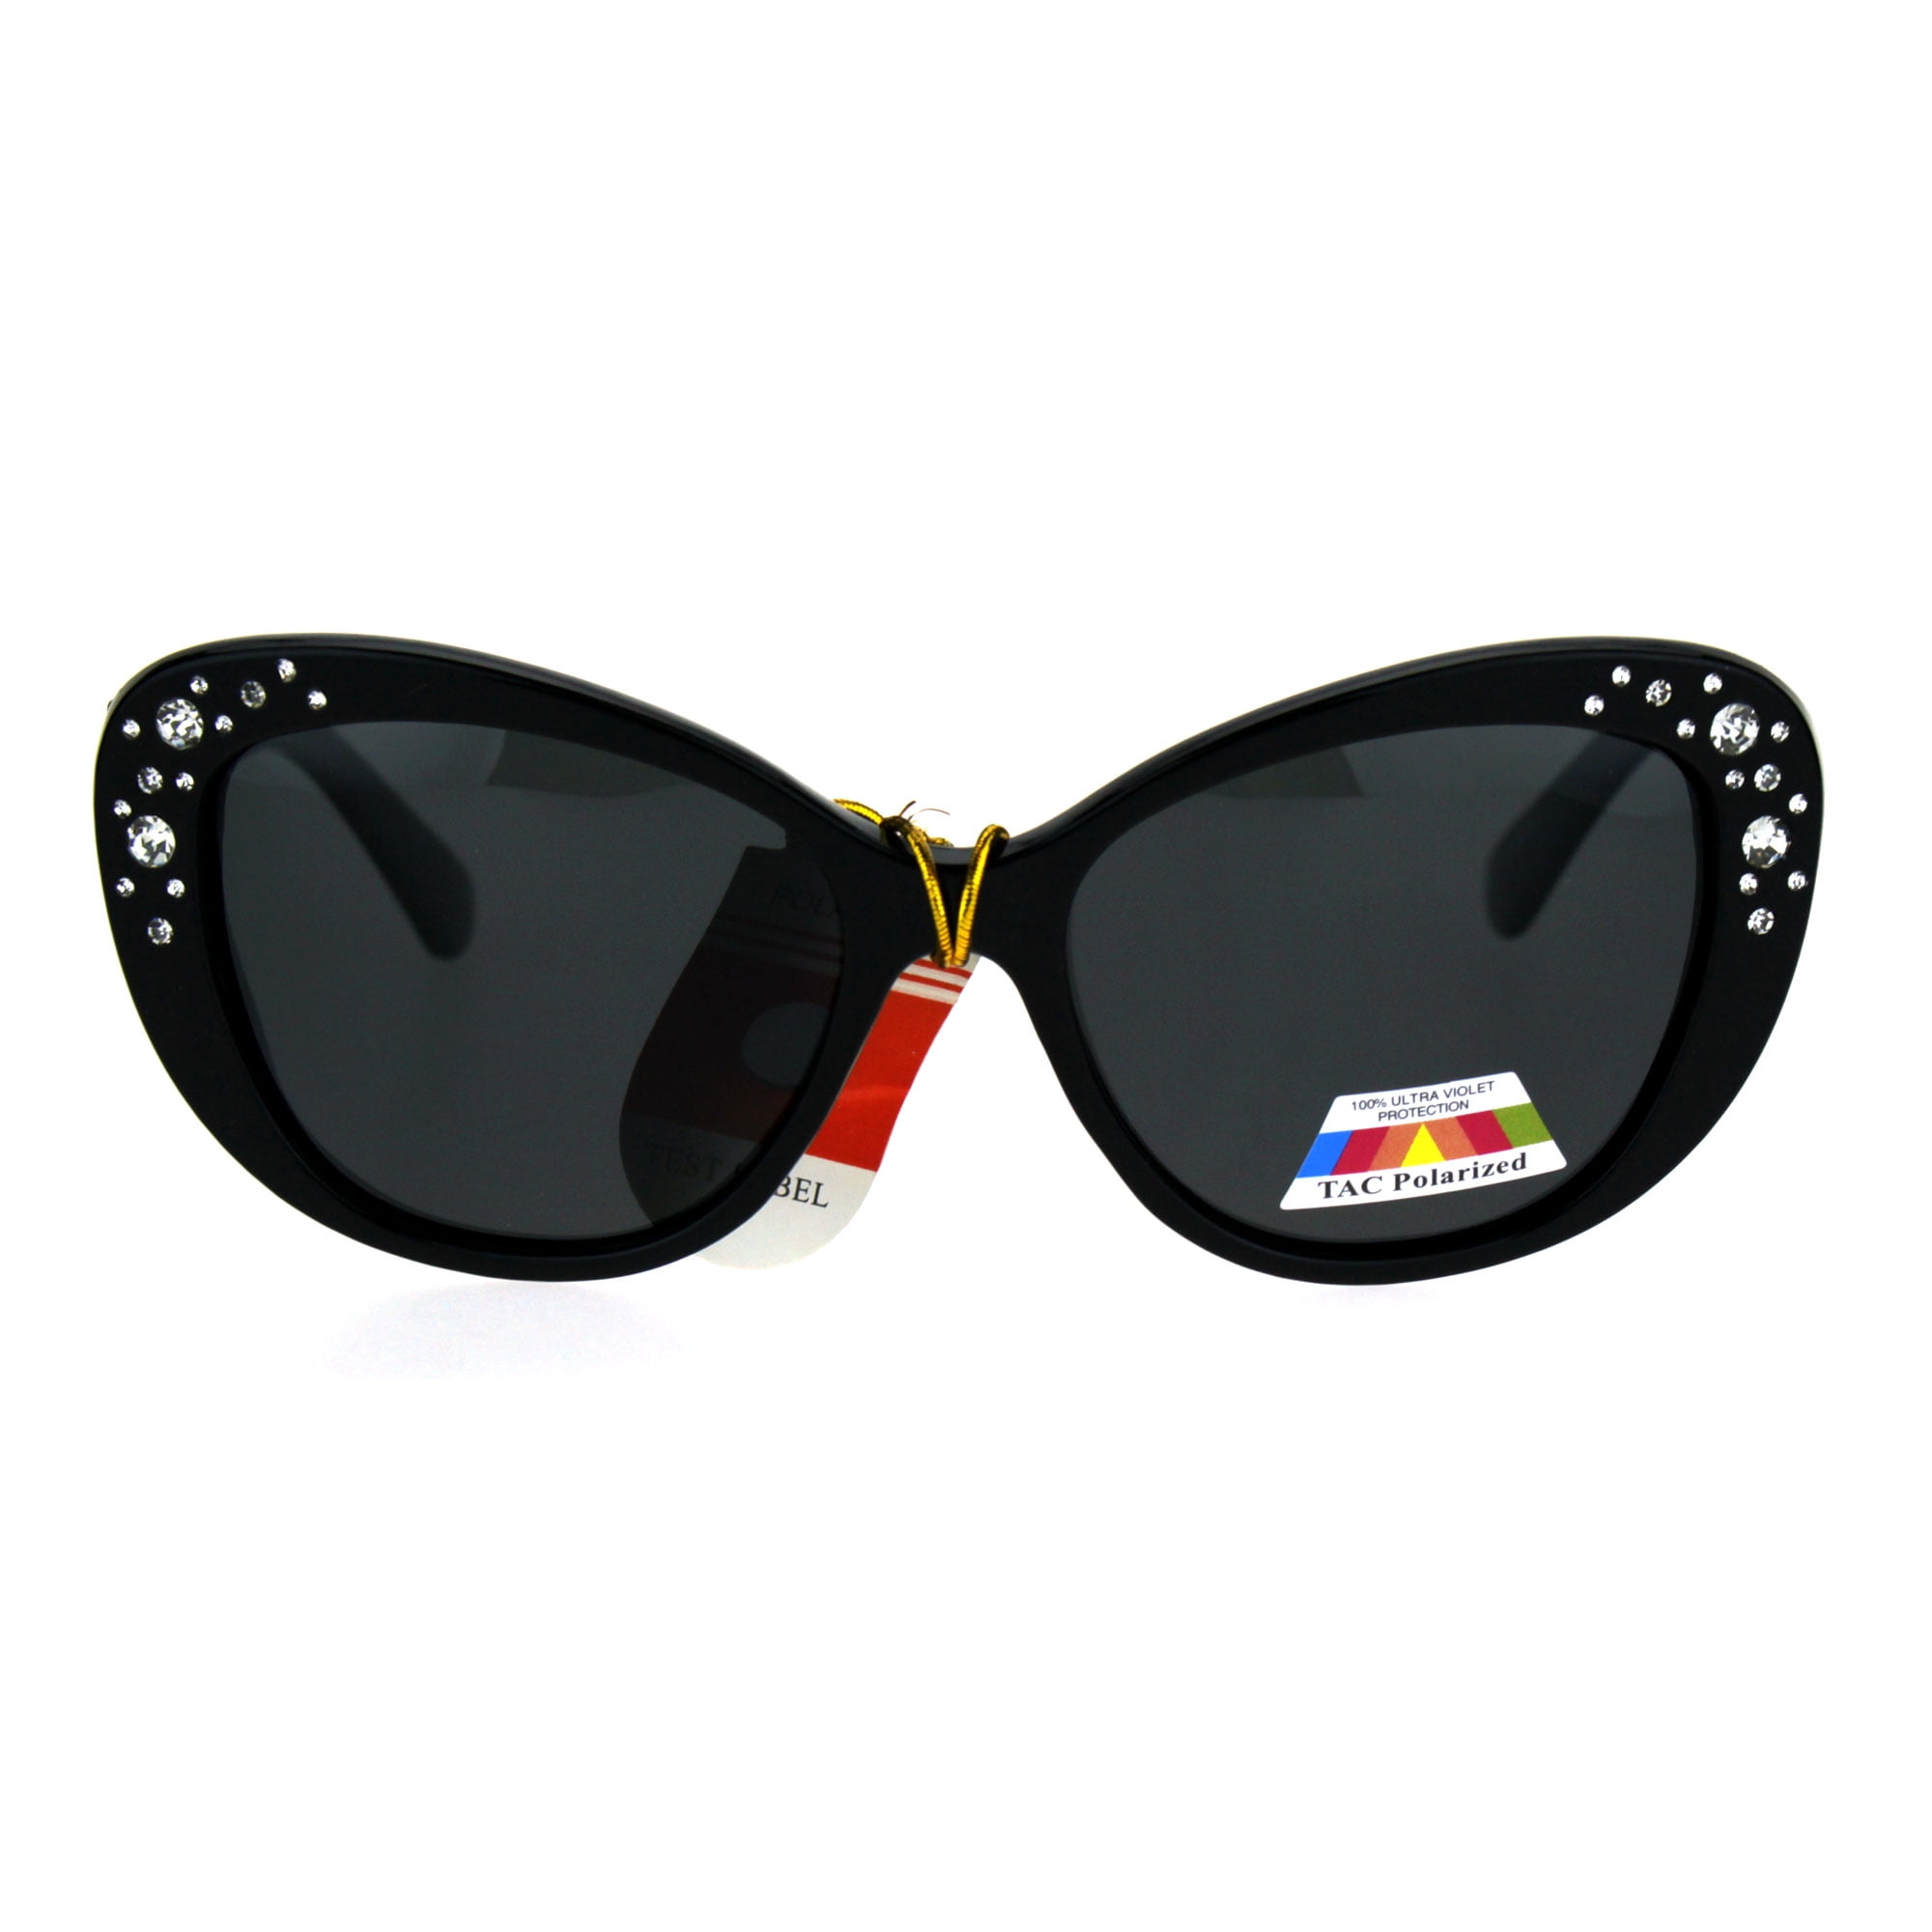 Antiglare Polarized Rhinestone Bling Thick Plastic Cat Eye Diva Sunglasses All Black